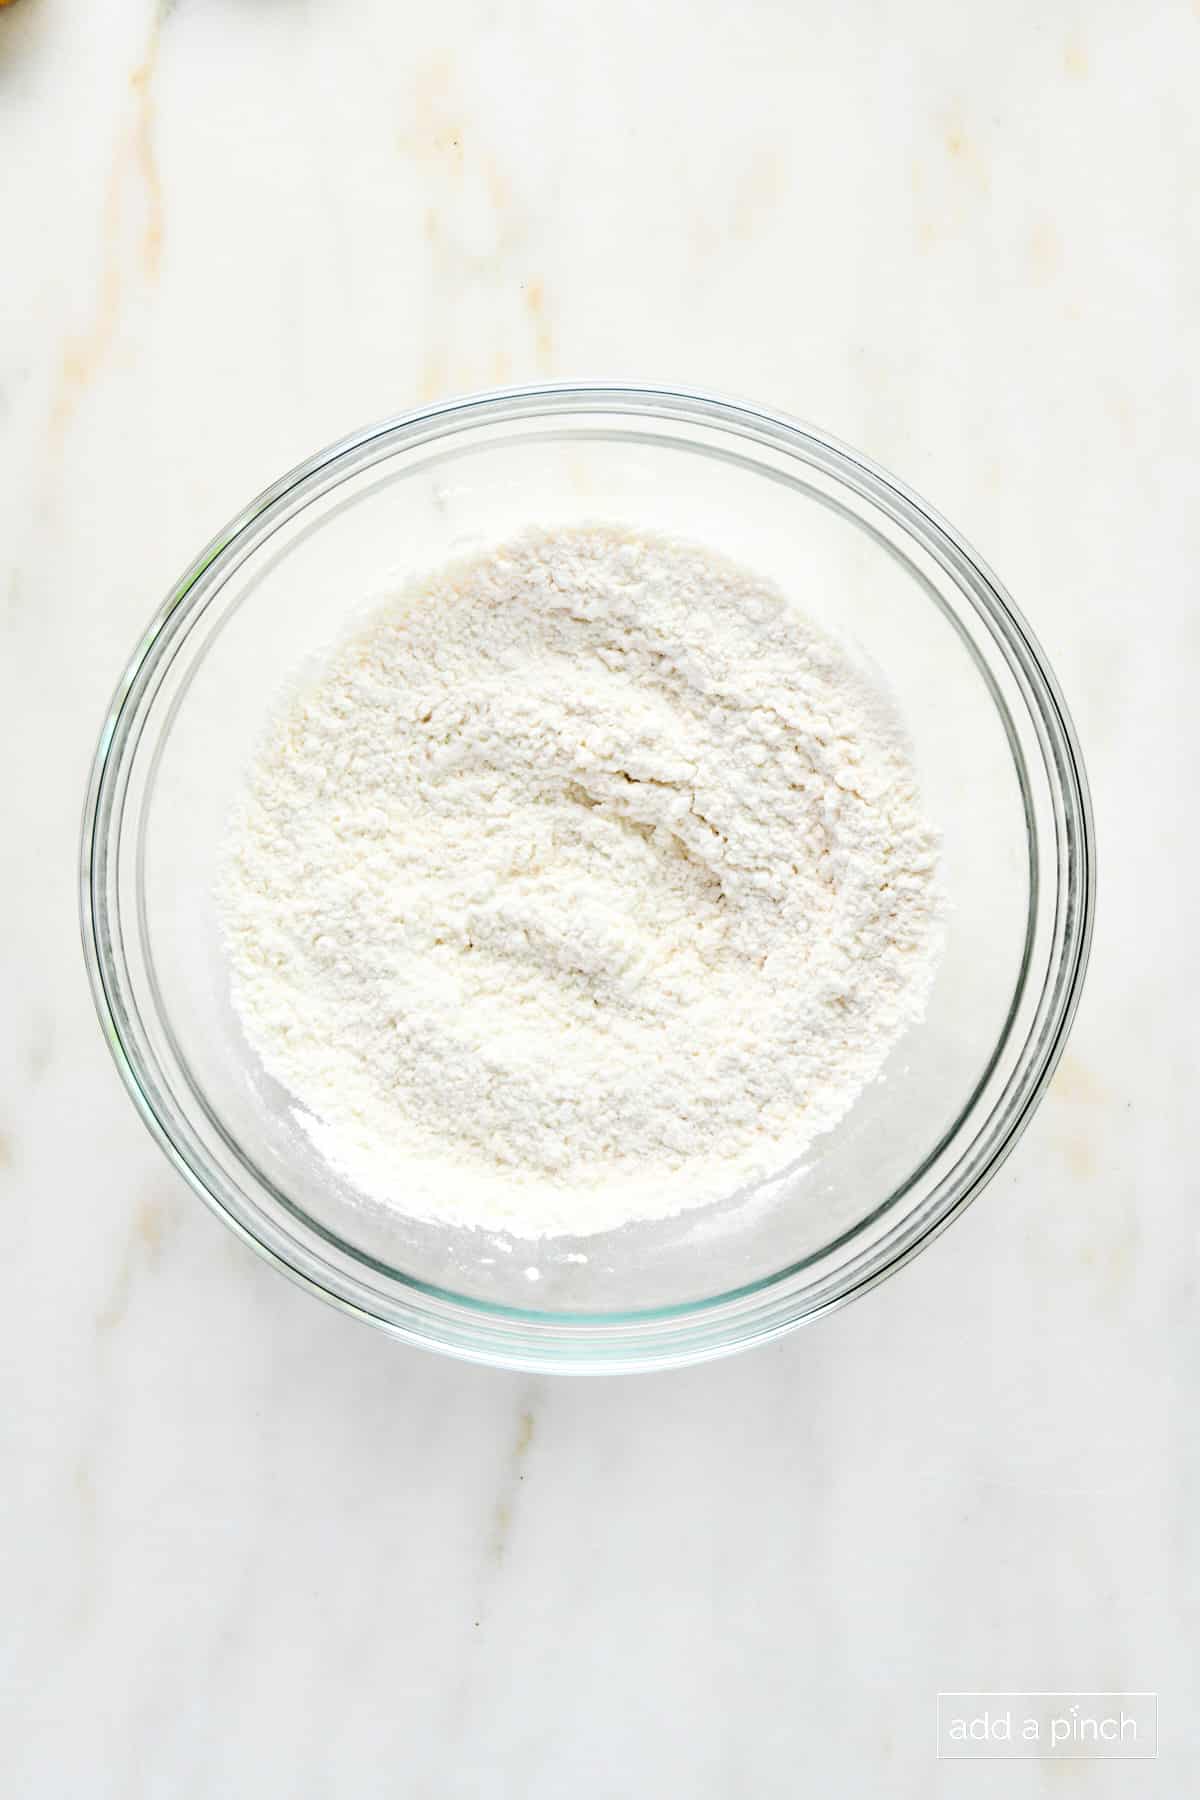 Flour mixture in a glass bowl